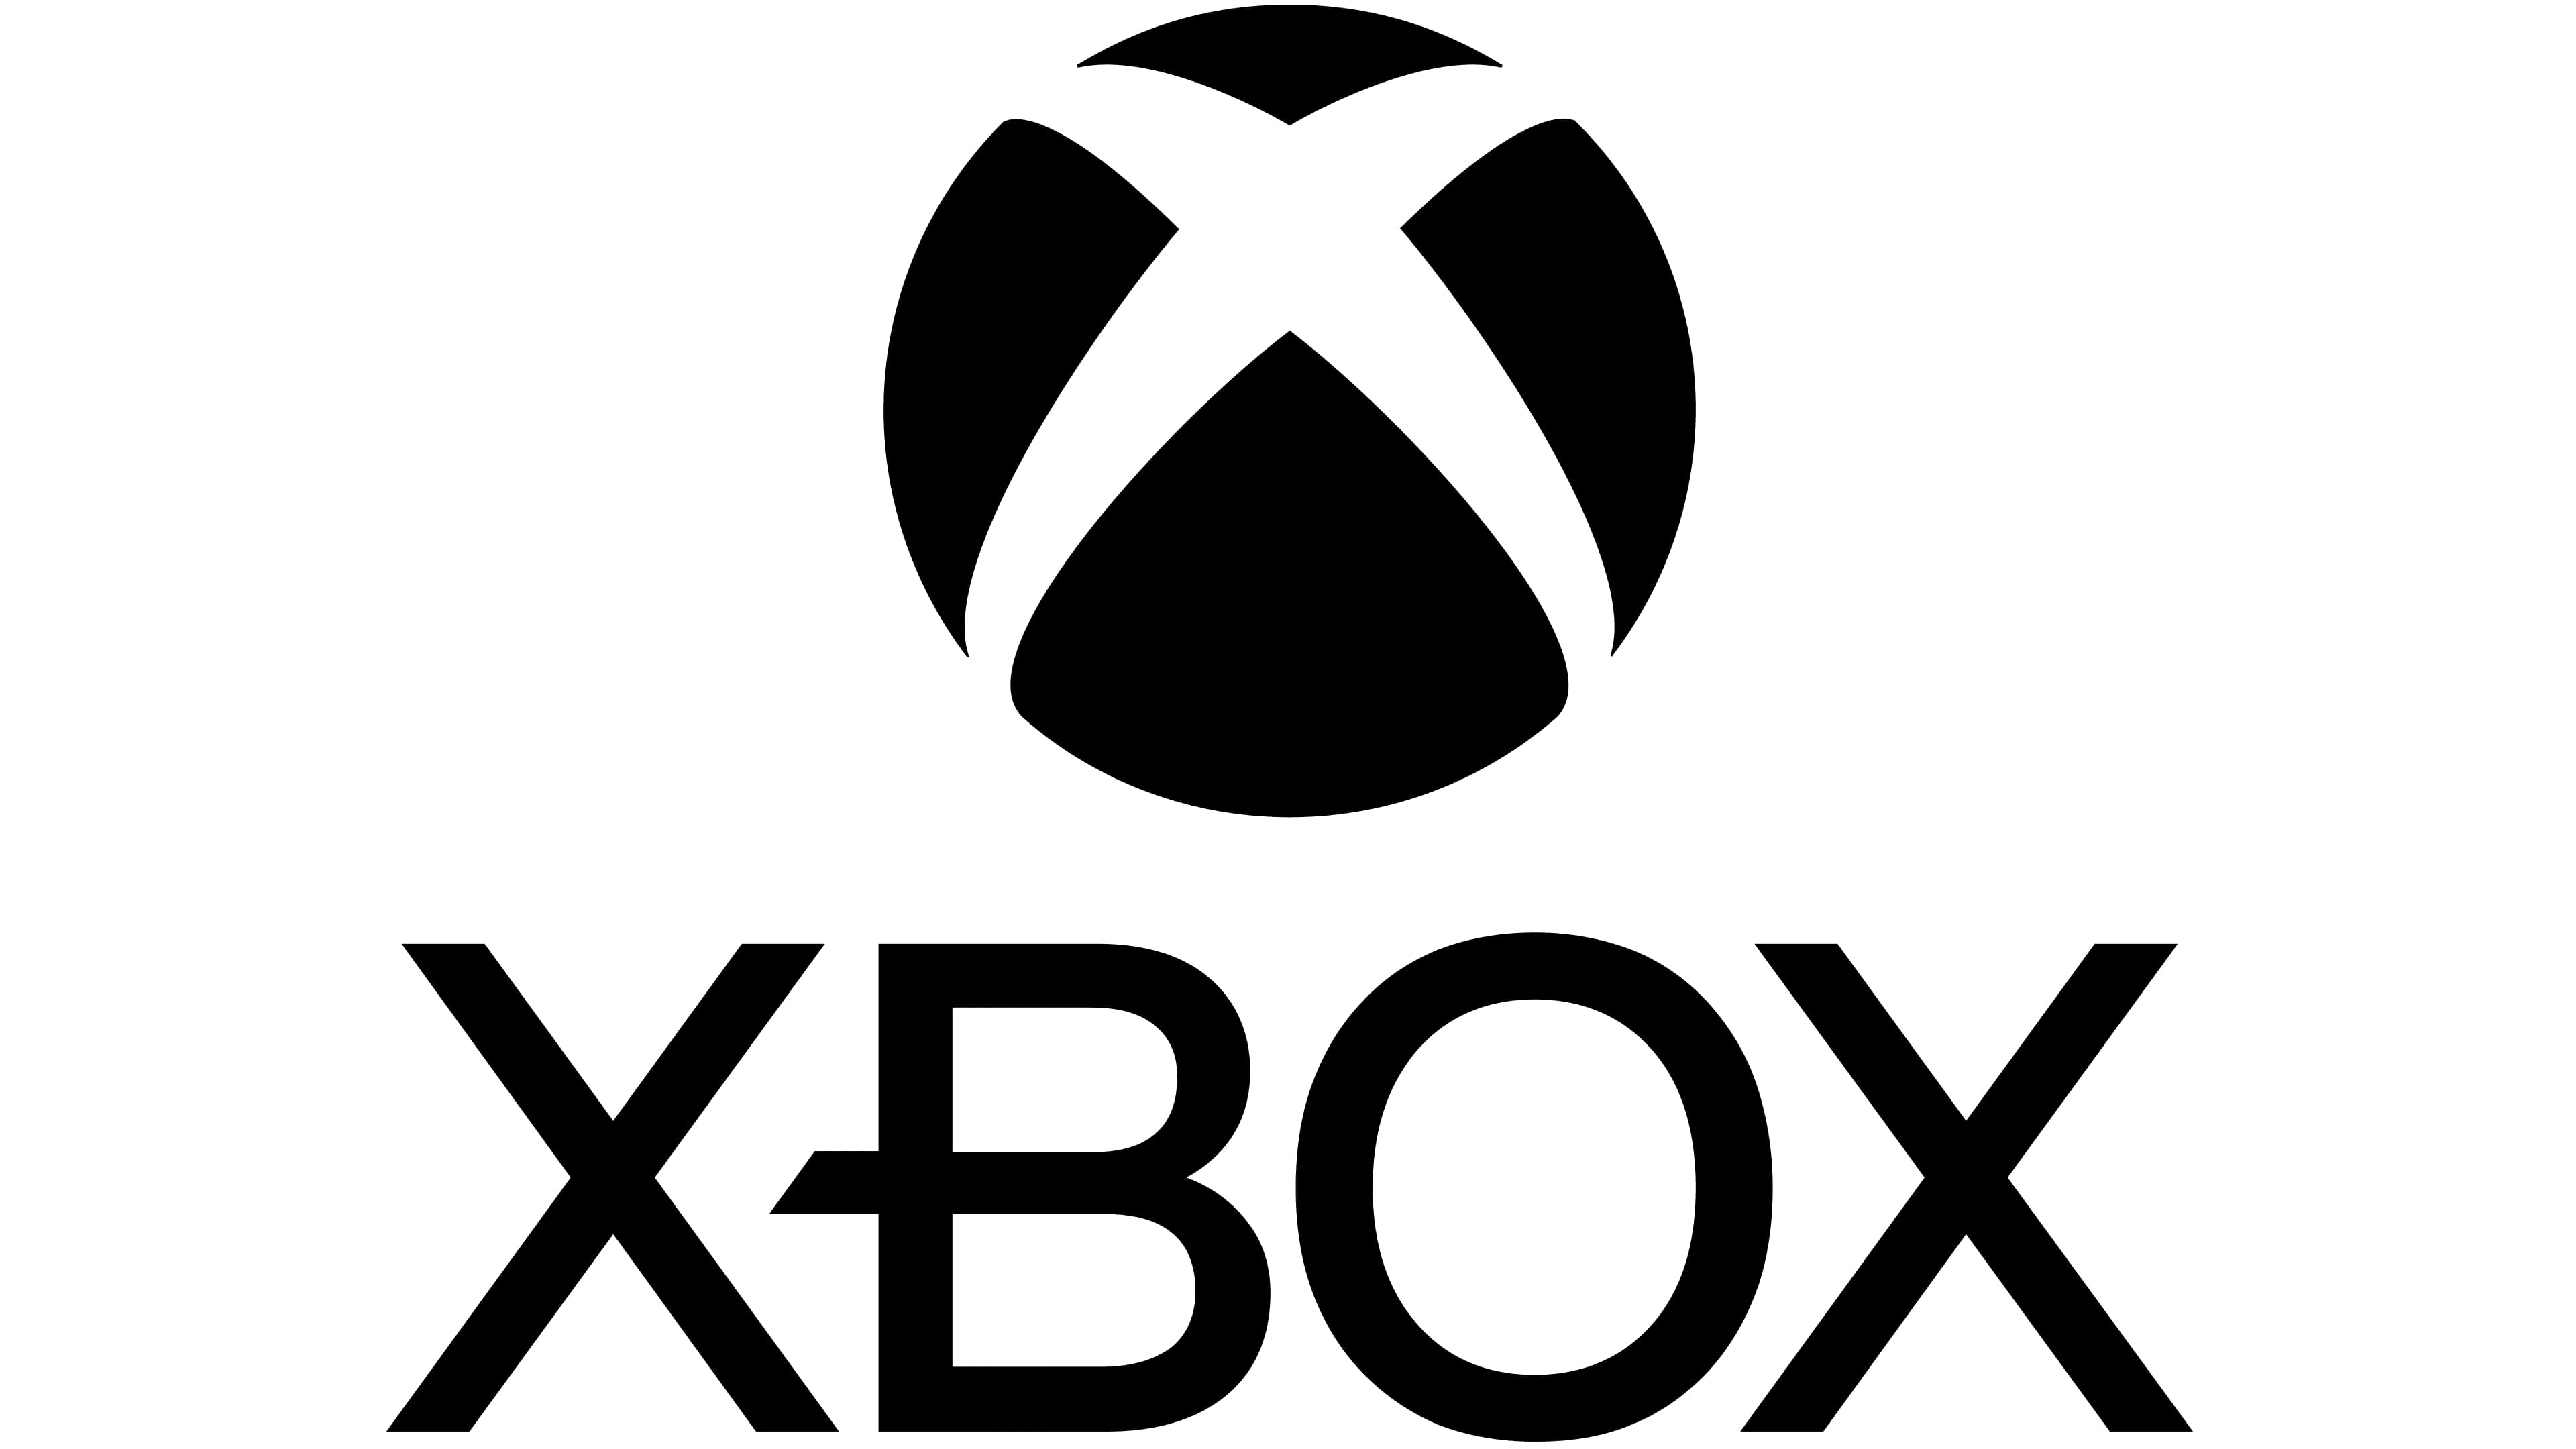 meteoor Door Baby Xbox Logo and symbol, meaning, history, PNG, brand